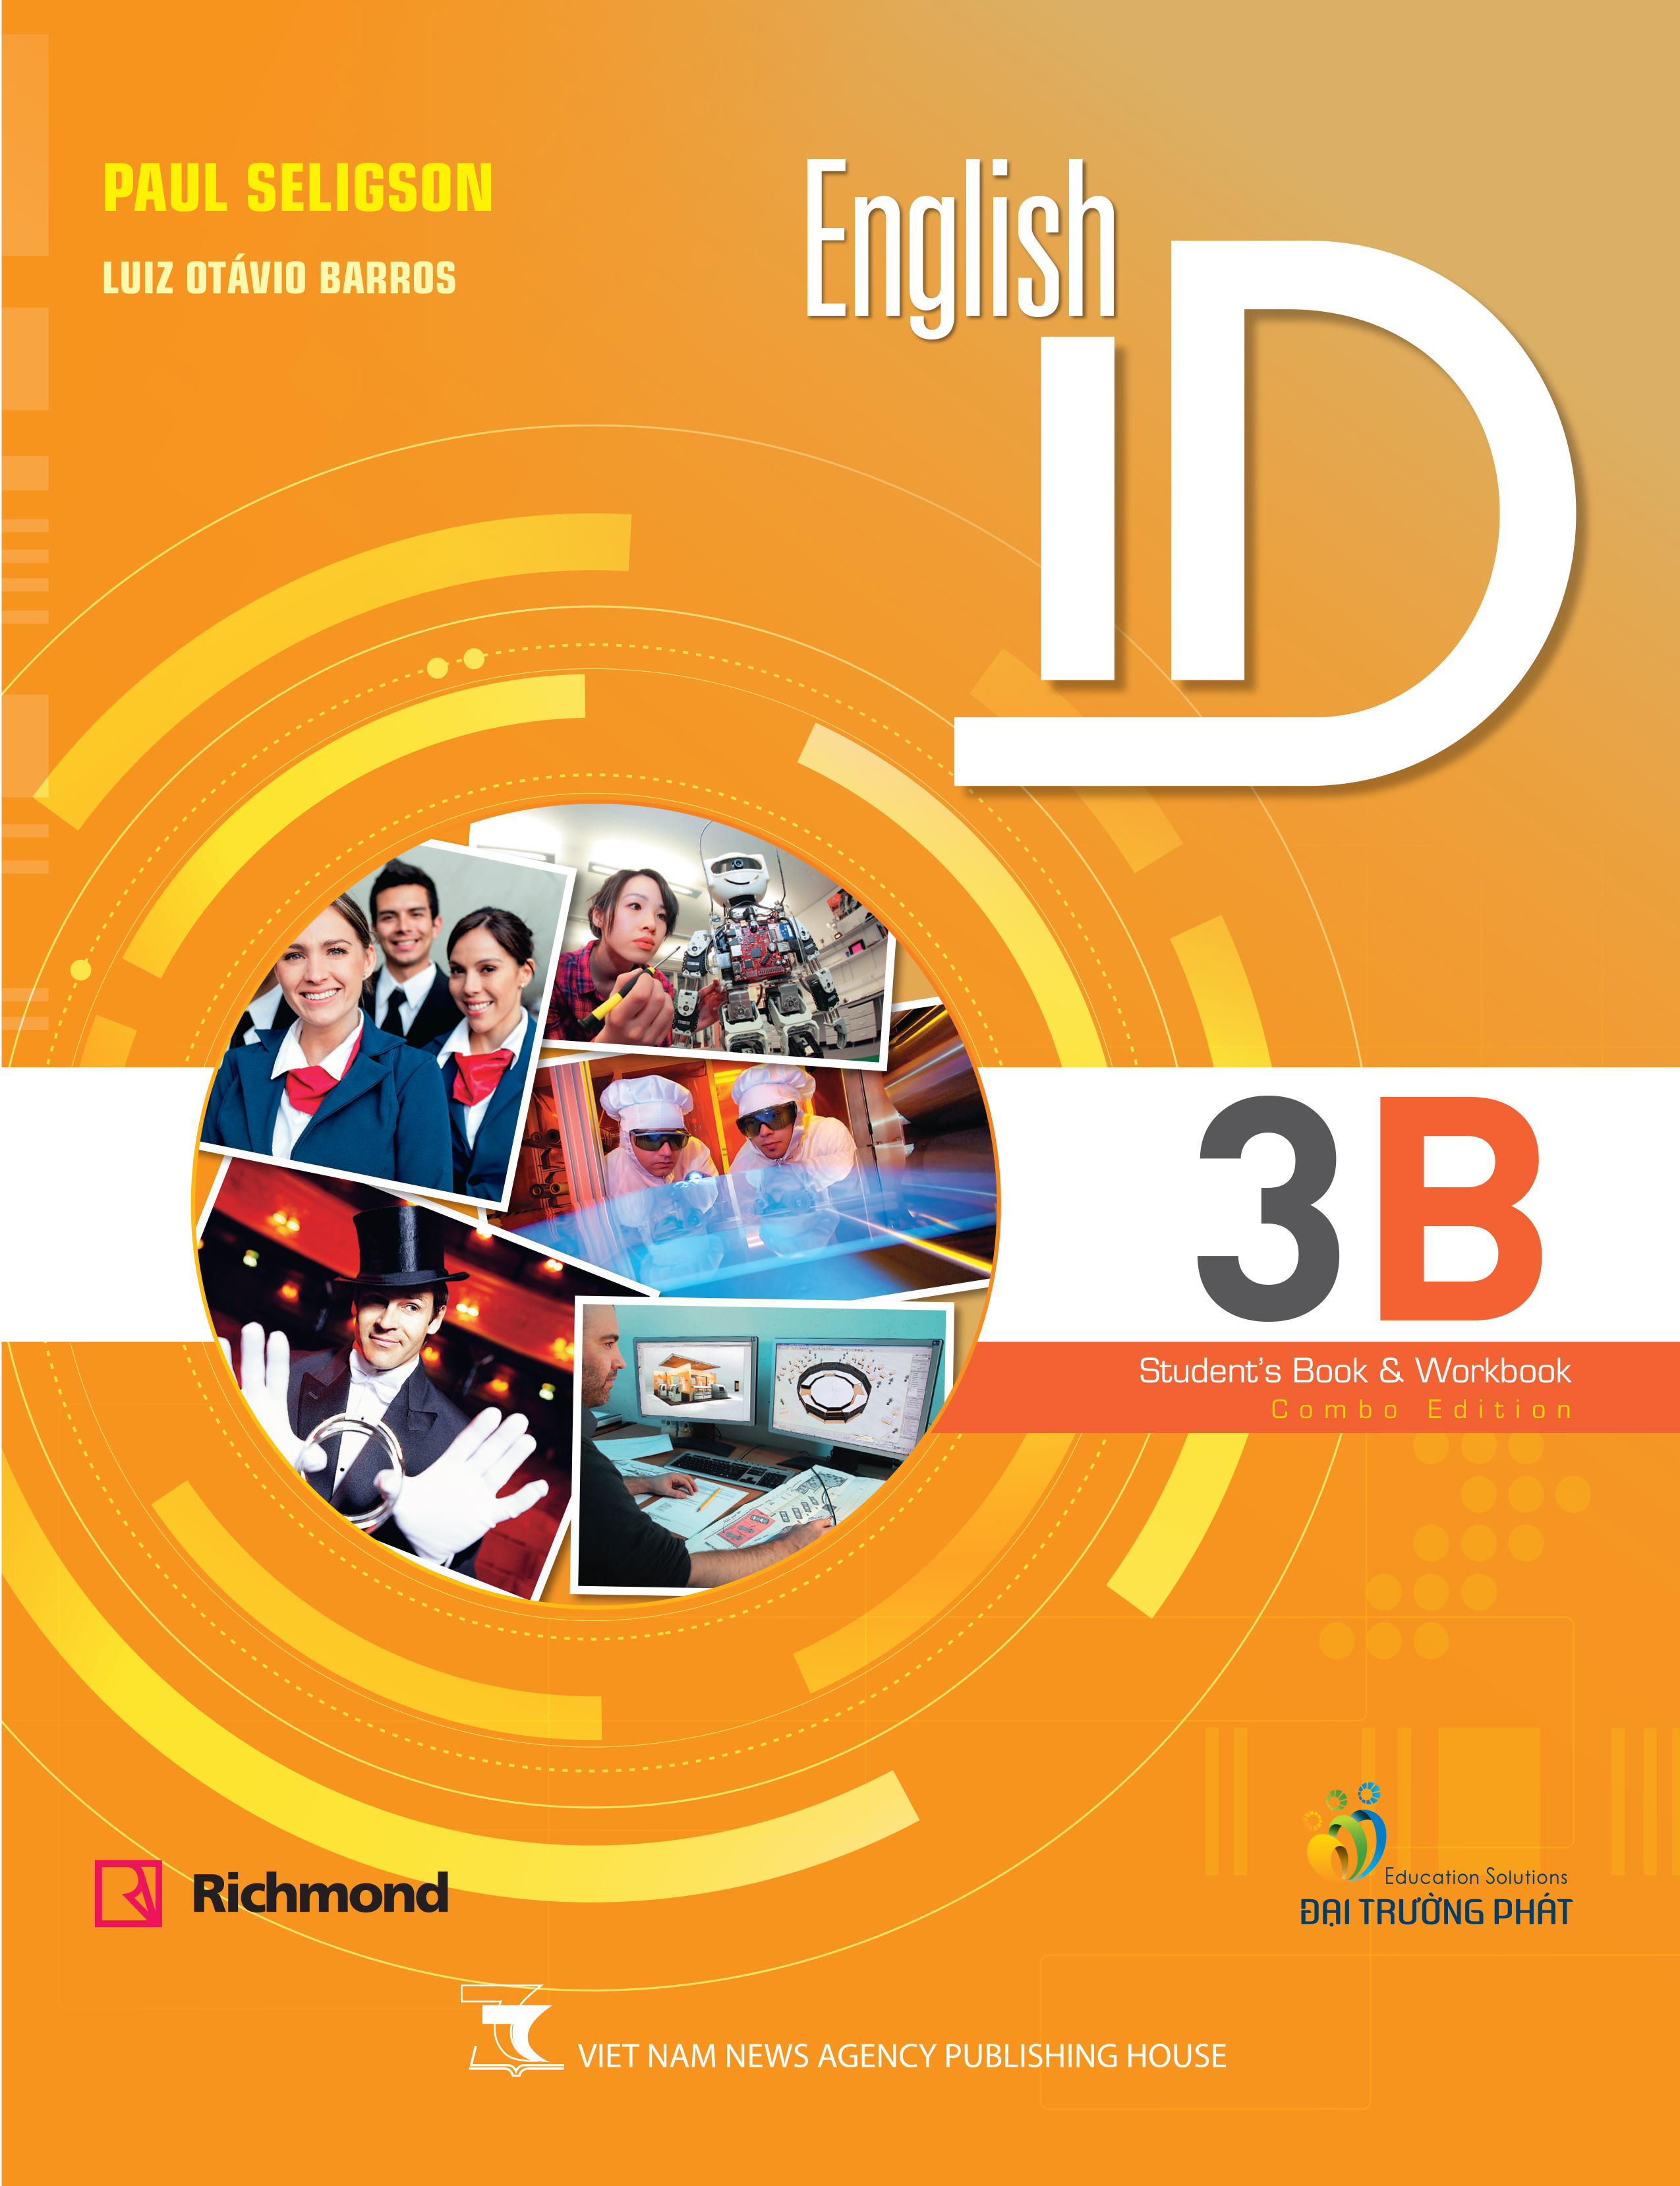 English ID 3B Student's Book